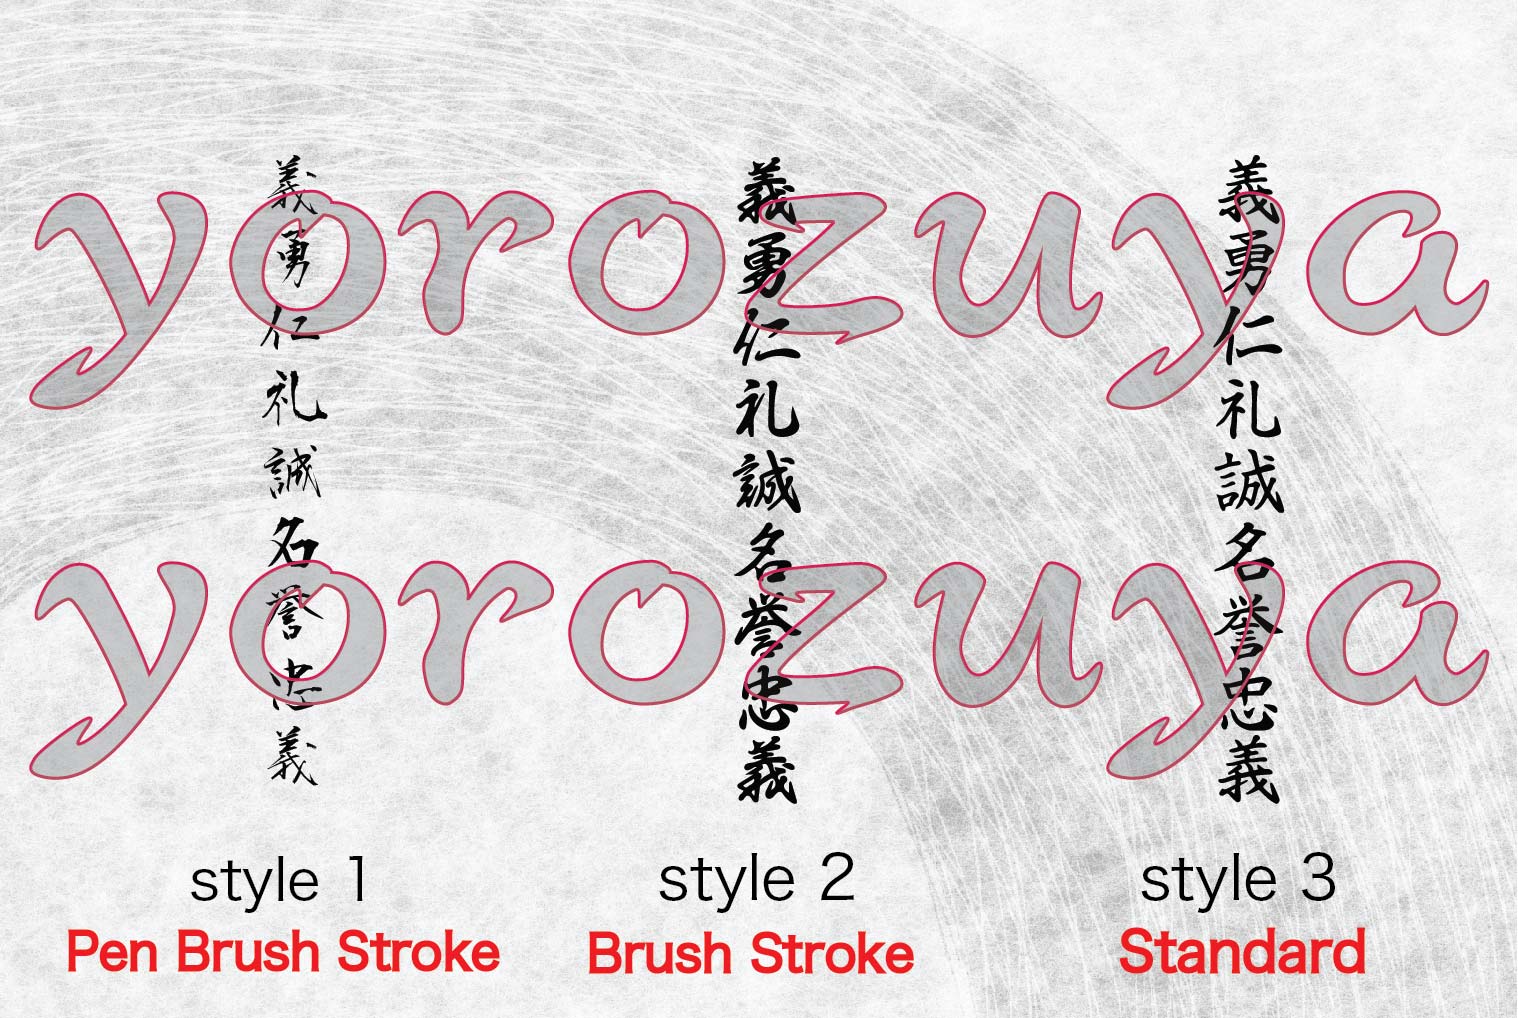 Bushido 7 Virtues for Tattoo in Japanese Kanji symbols,